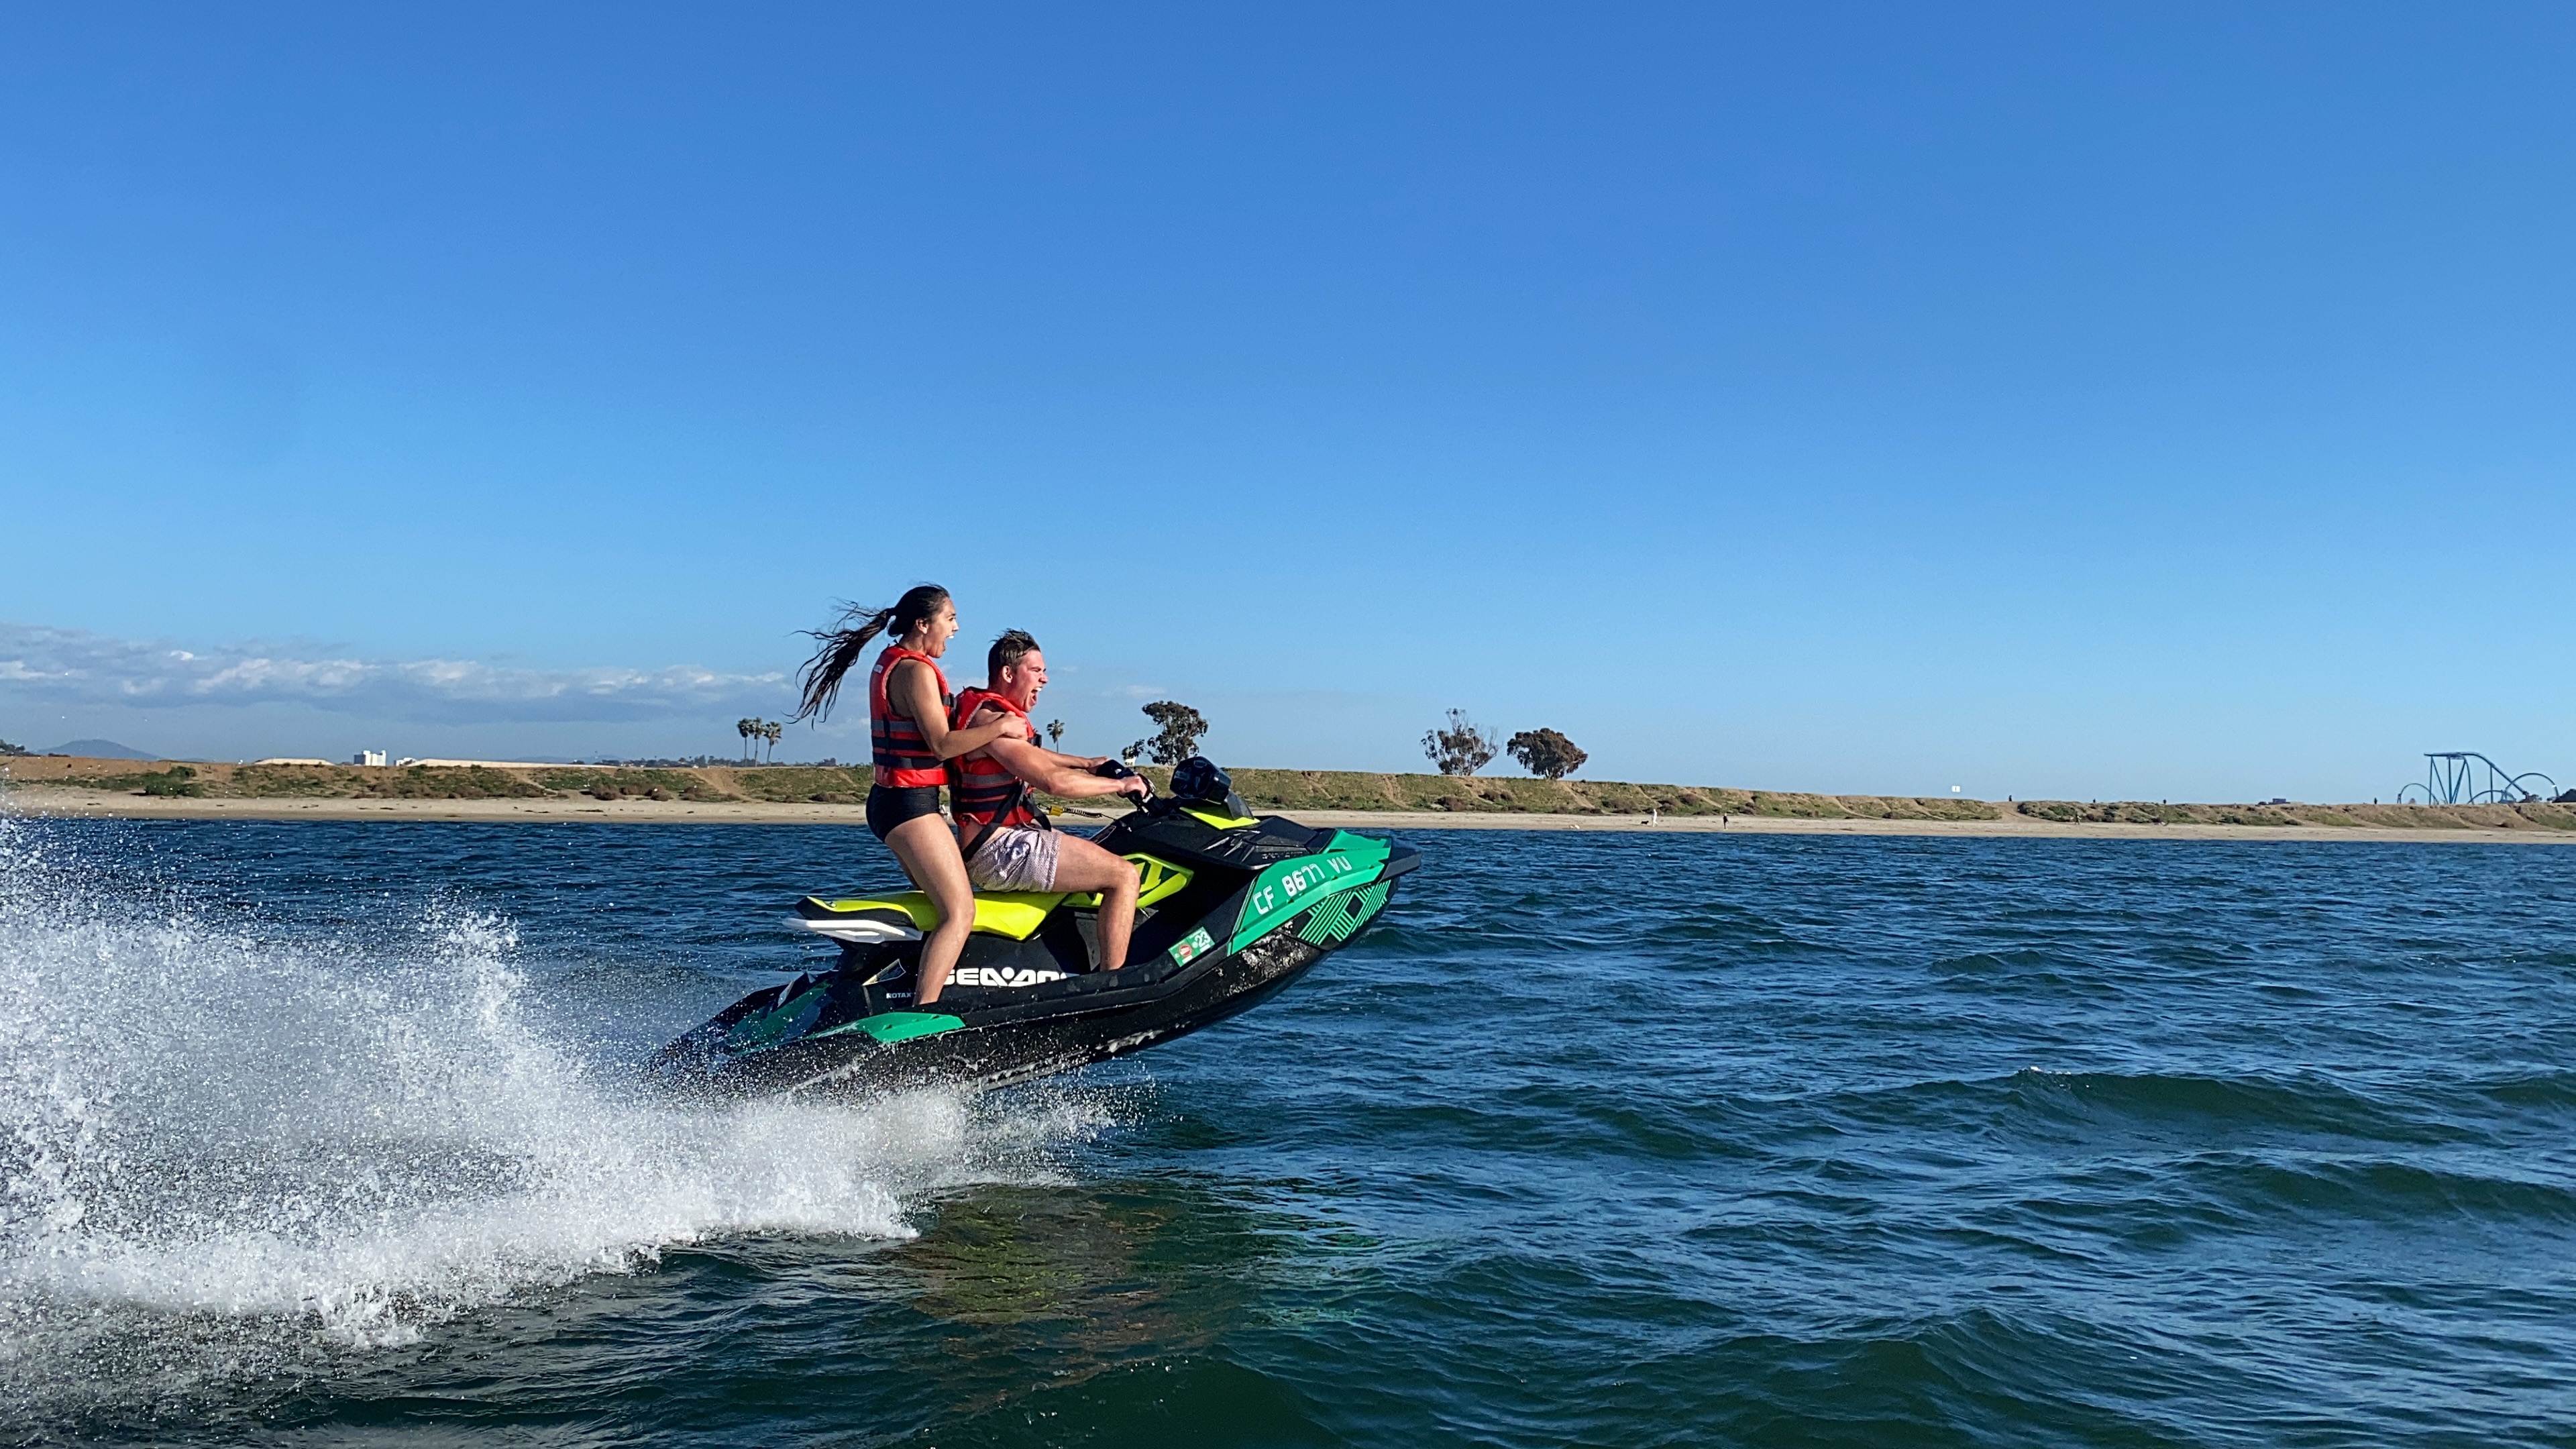 2021 Sea-Doo Spark Trixx, San Diego jet ski rentals, Fun on the water, Unforgettable experiences, 3840x2160 4K Desktop